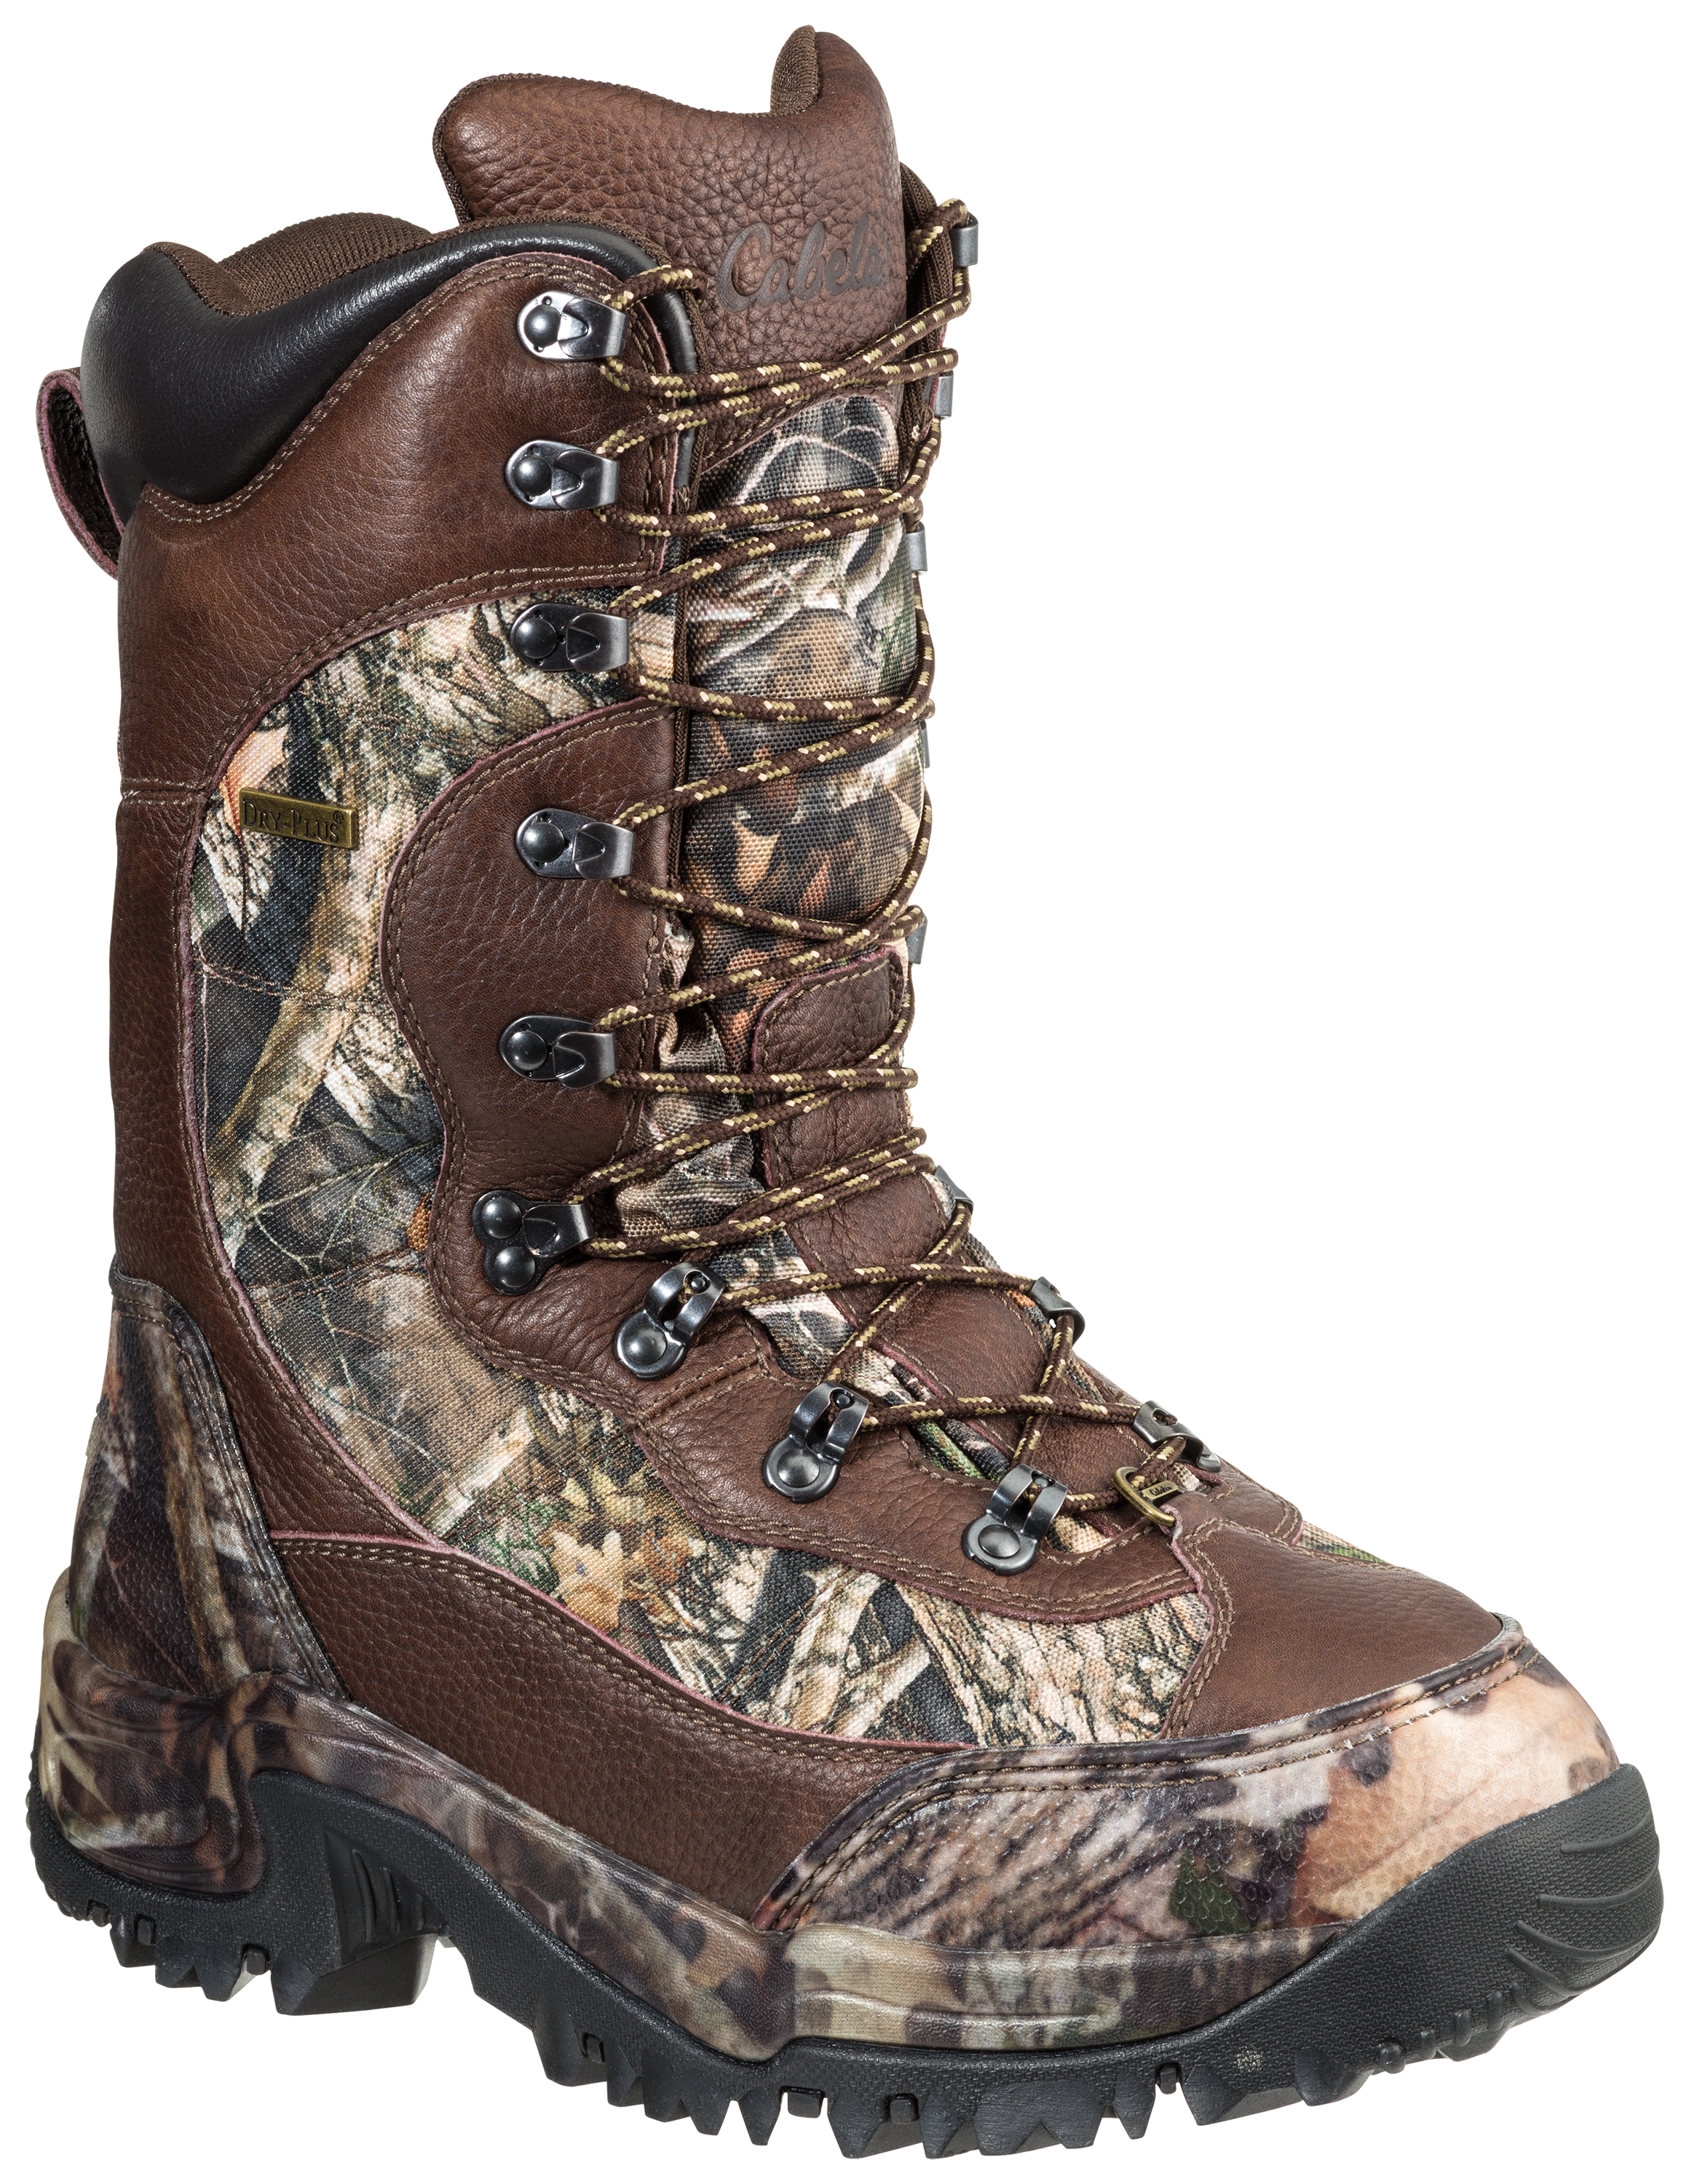 Cabela's Inferno Insulated Waterproof Hunting Boots for Men - Brown/TrueTimber Kanati - 11M